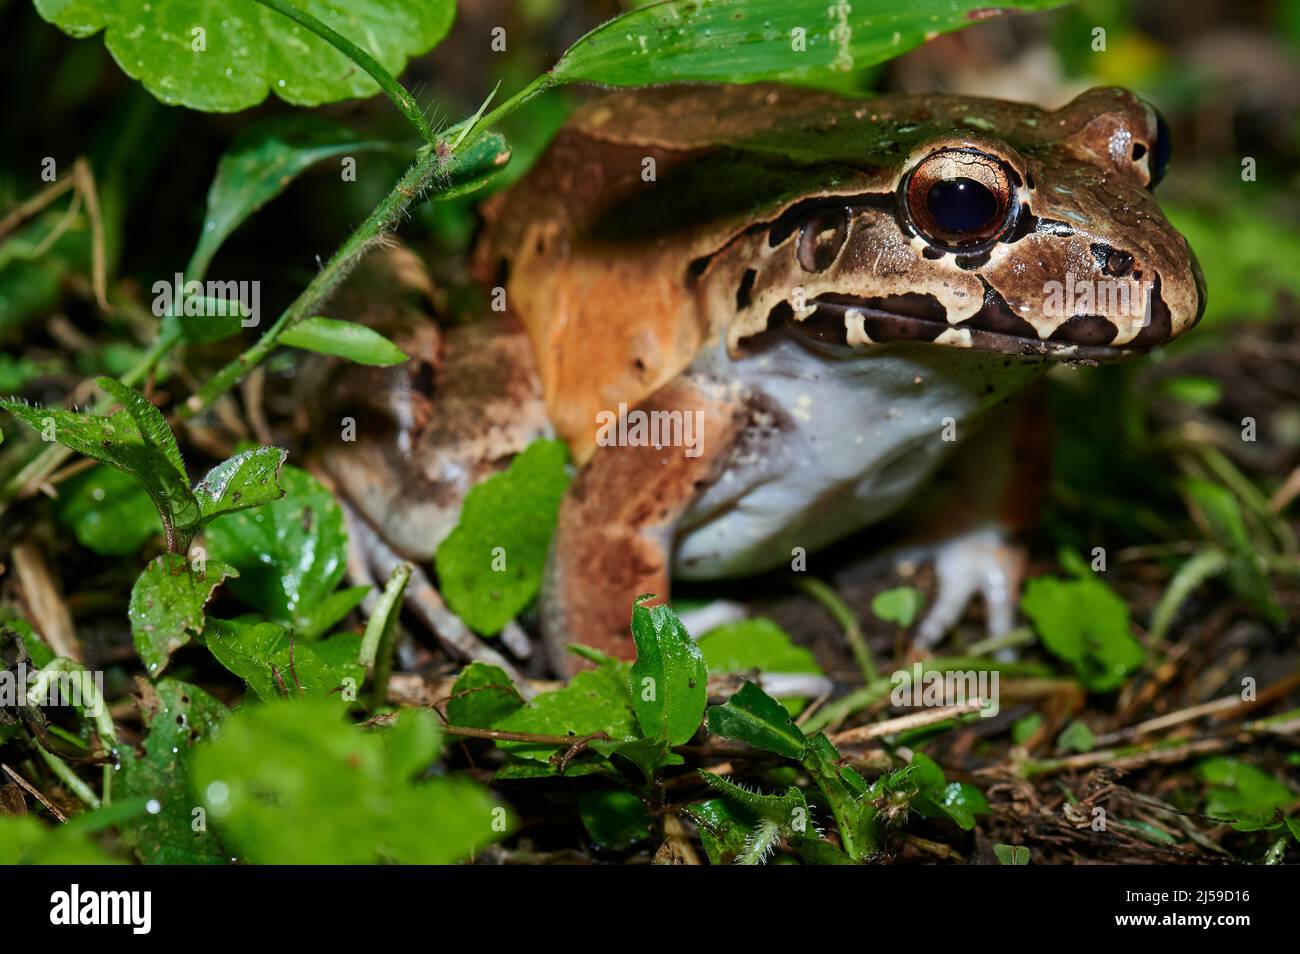 Selvaggio rana dalla punta sottile specie di rana leptodactylid (Leptodactylus savagei), Parque Nacional Volcán Arenal, Costa Rica, America Centrale Foto Stock